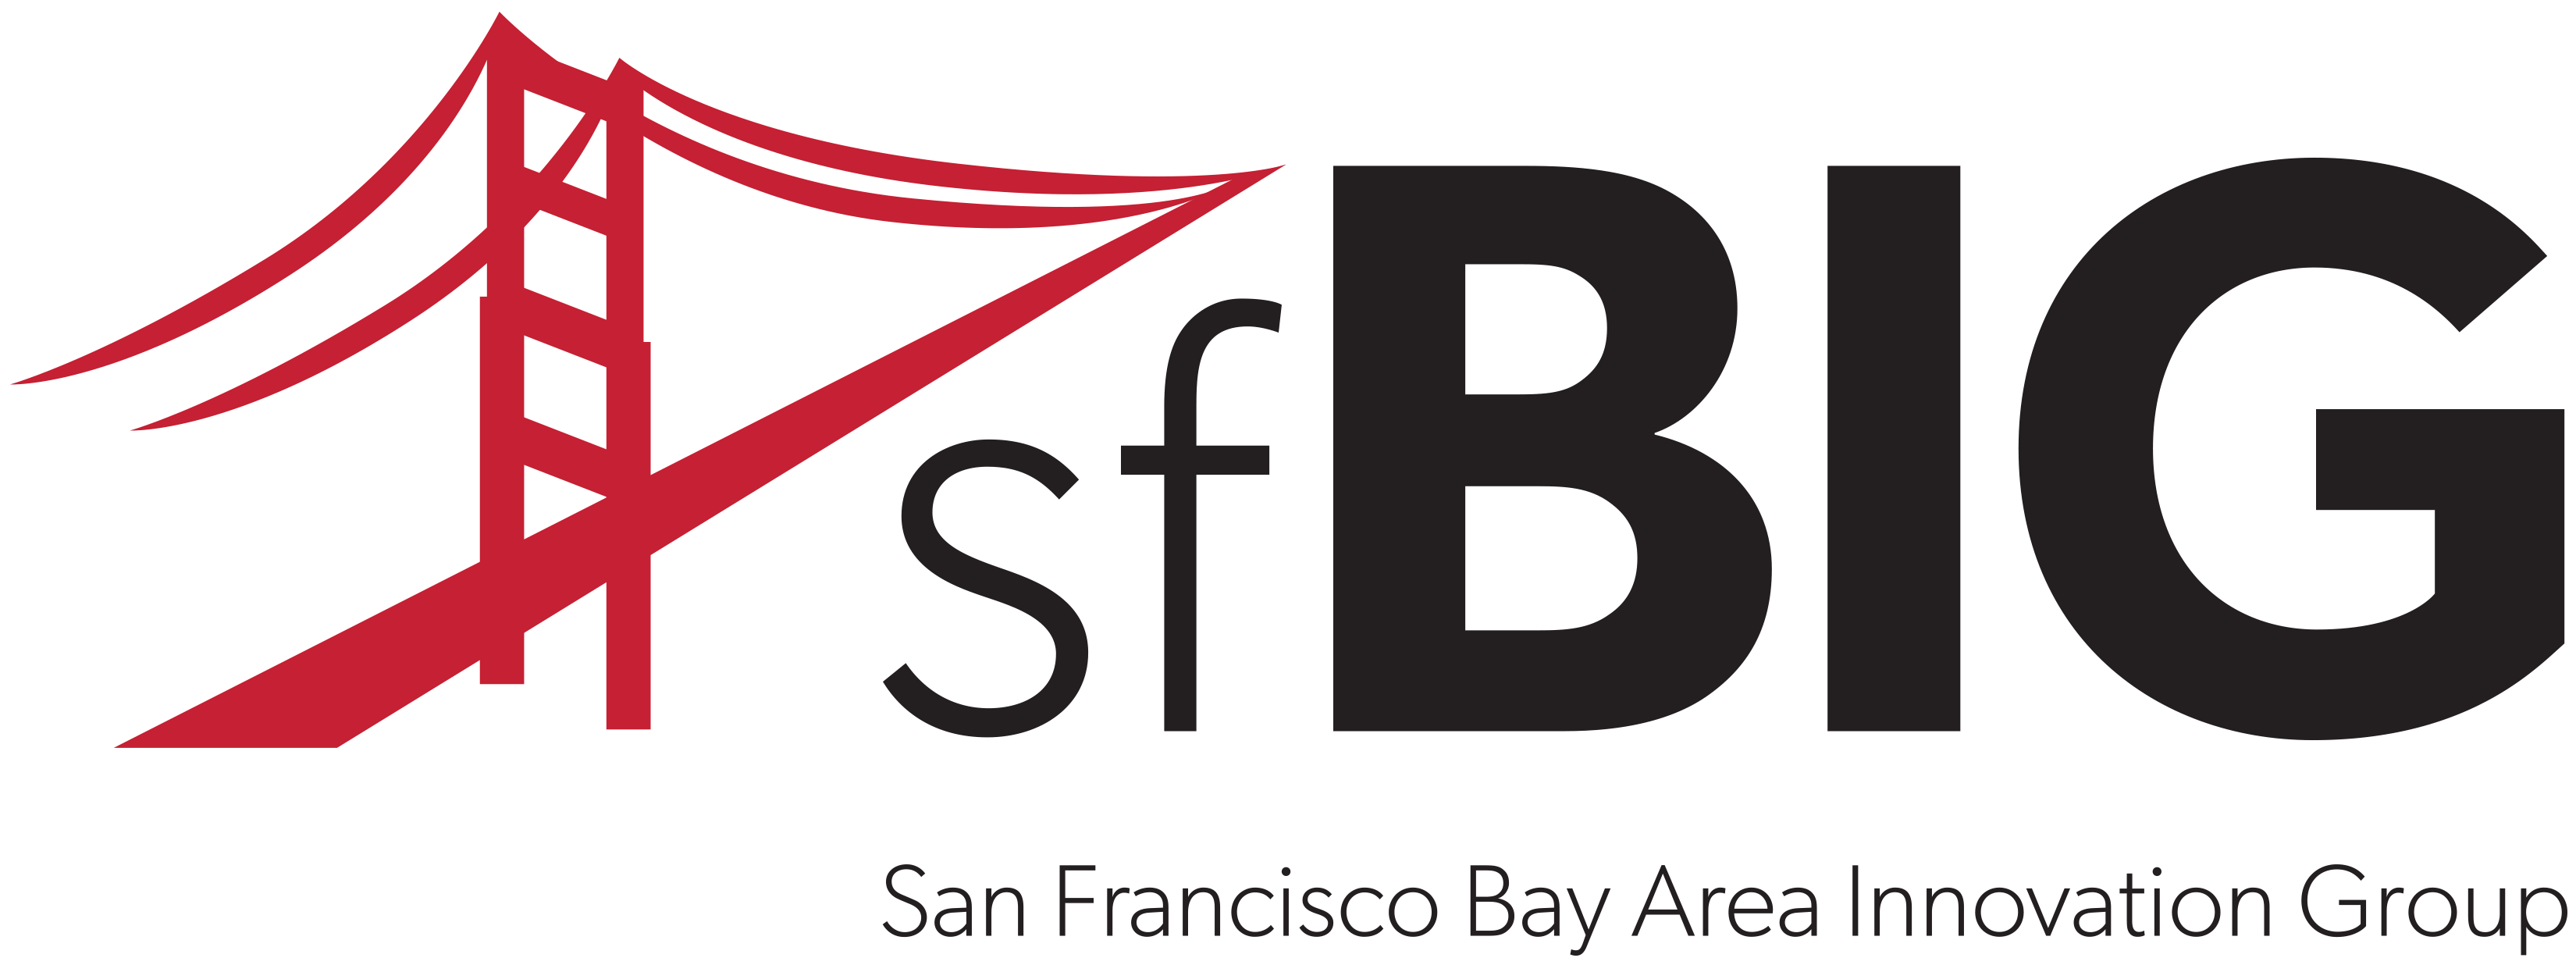 B.I.g Logo - sfBIG - San Francisco Bay Area Innovation Group